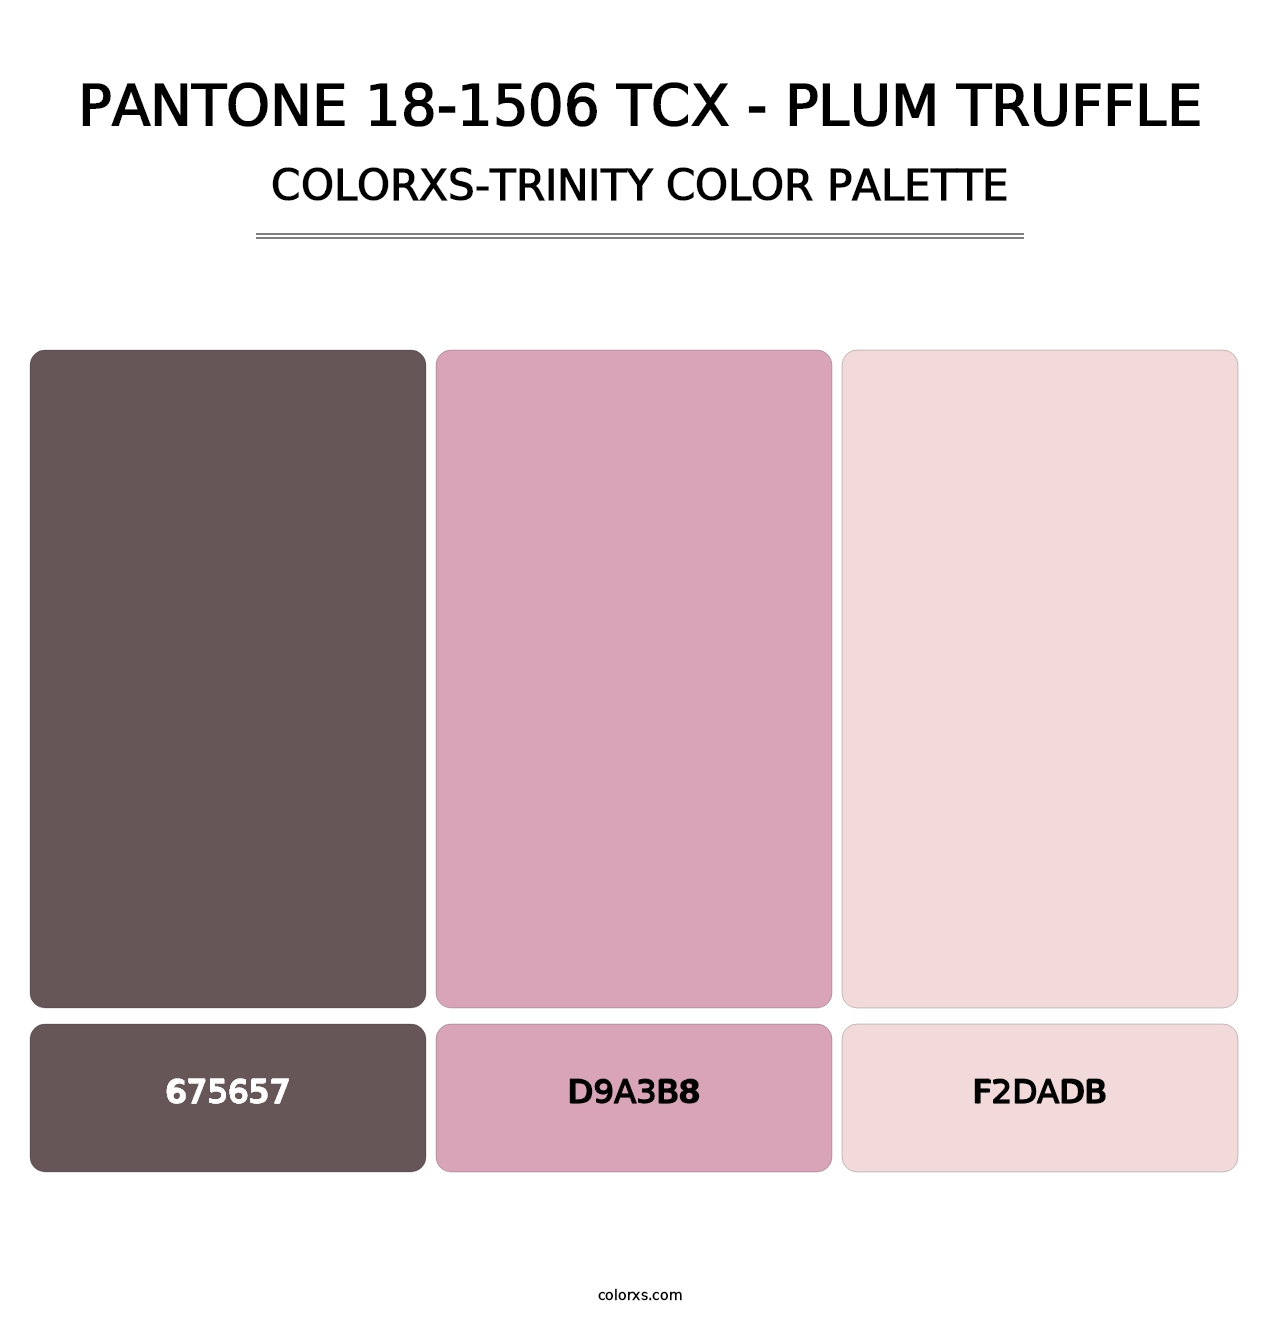 PANTONE 18-1506 TCX - Plum Truffle - Colorxs Trinity Palette